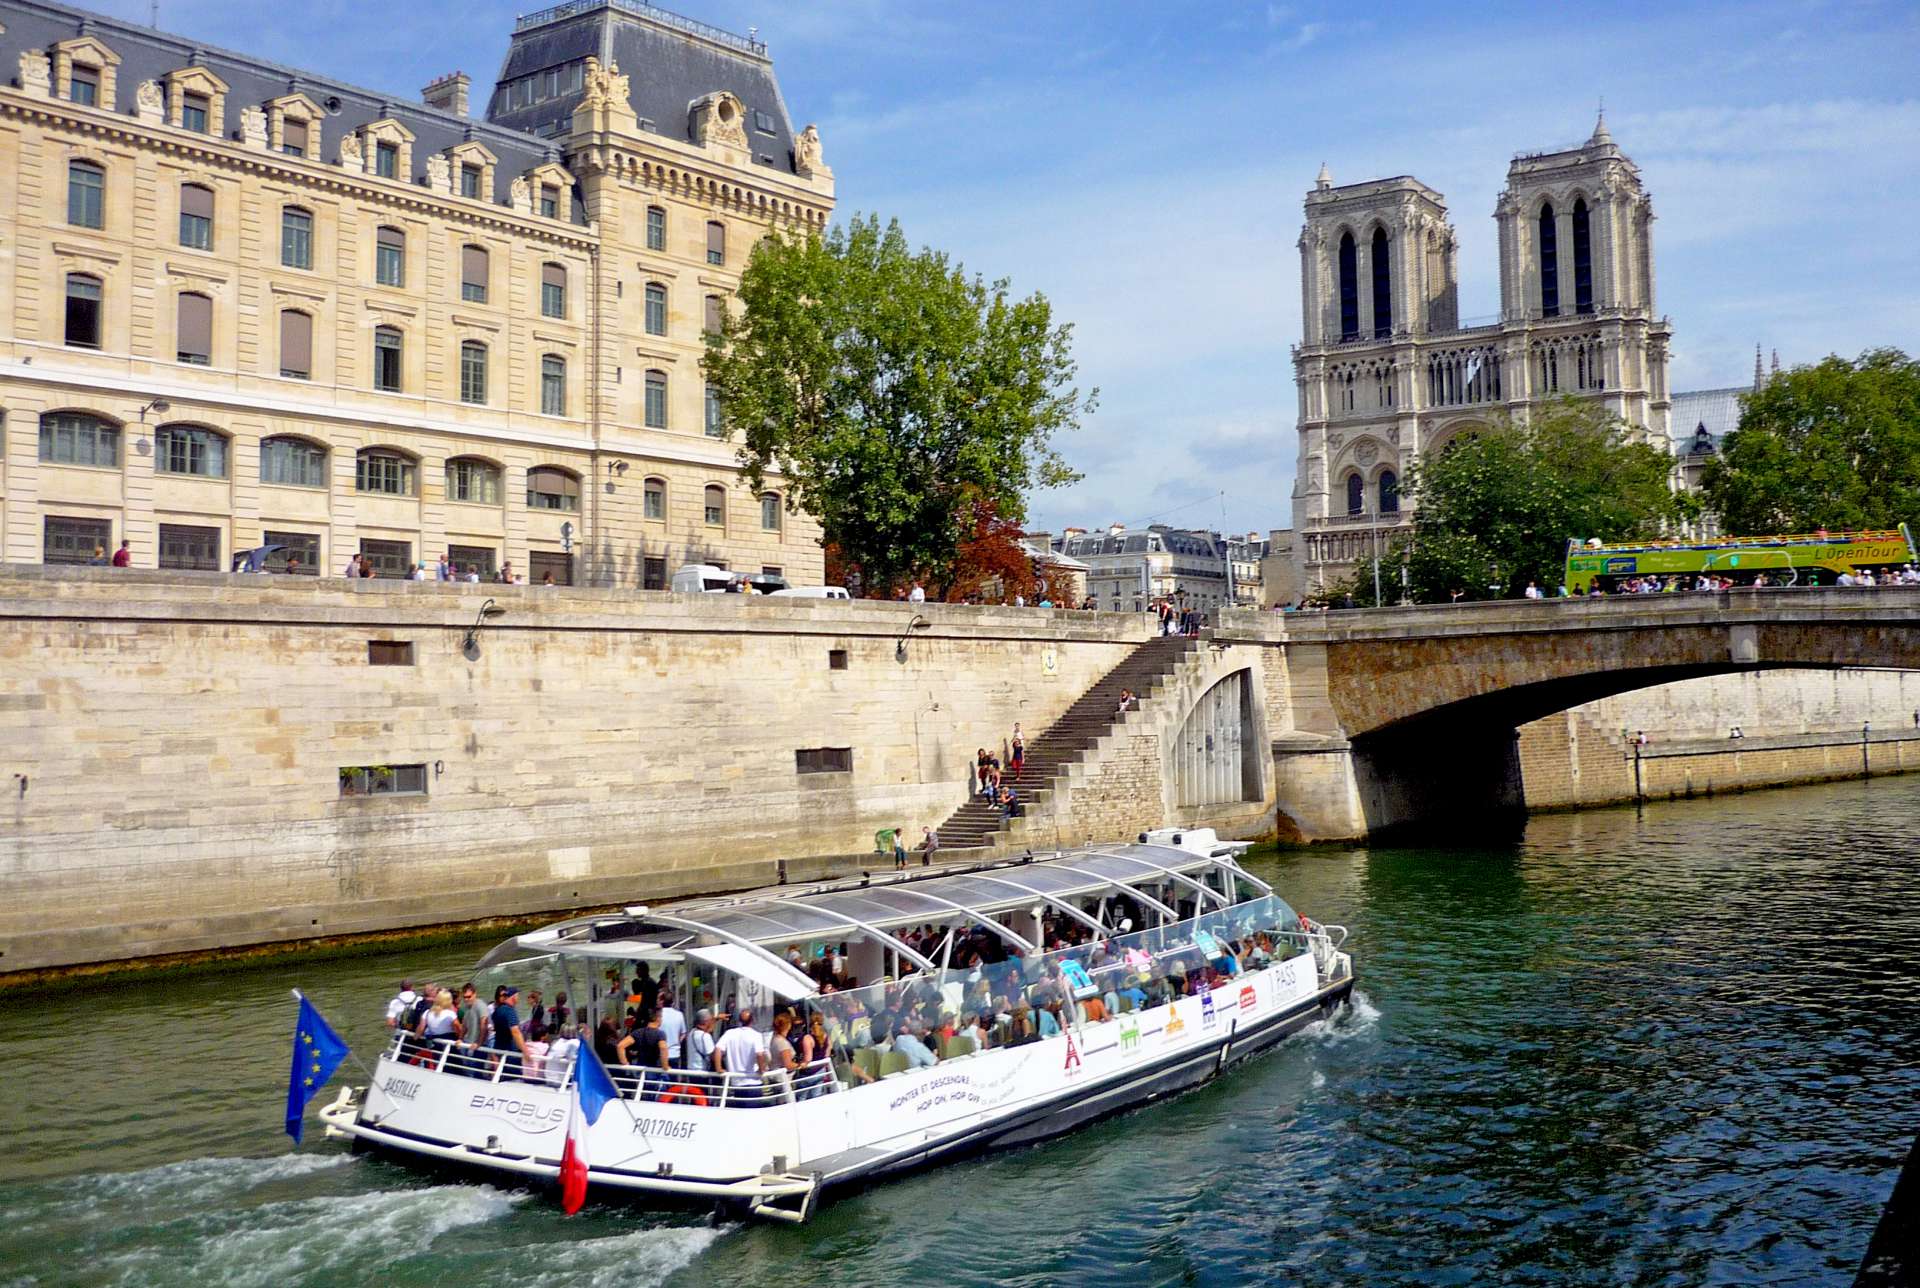 Сена банк. Река сена во Франции. Река сена в Париже. Достопримечательности Франции. Река сена. Набережная Сены в Париже.